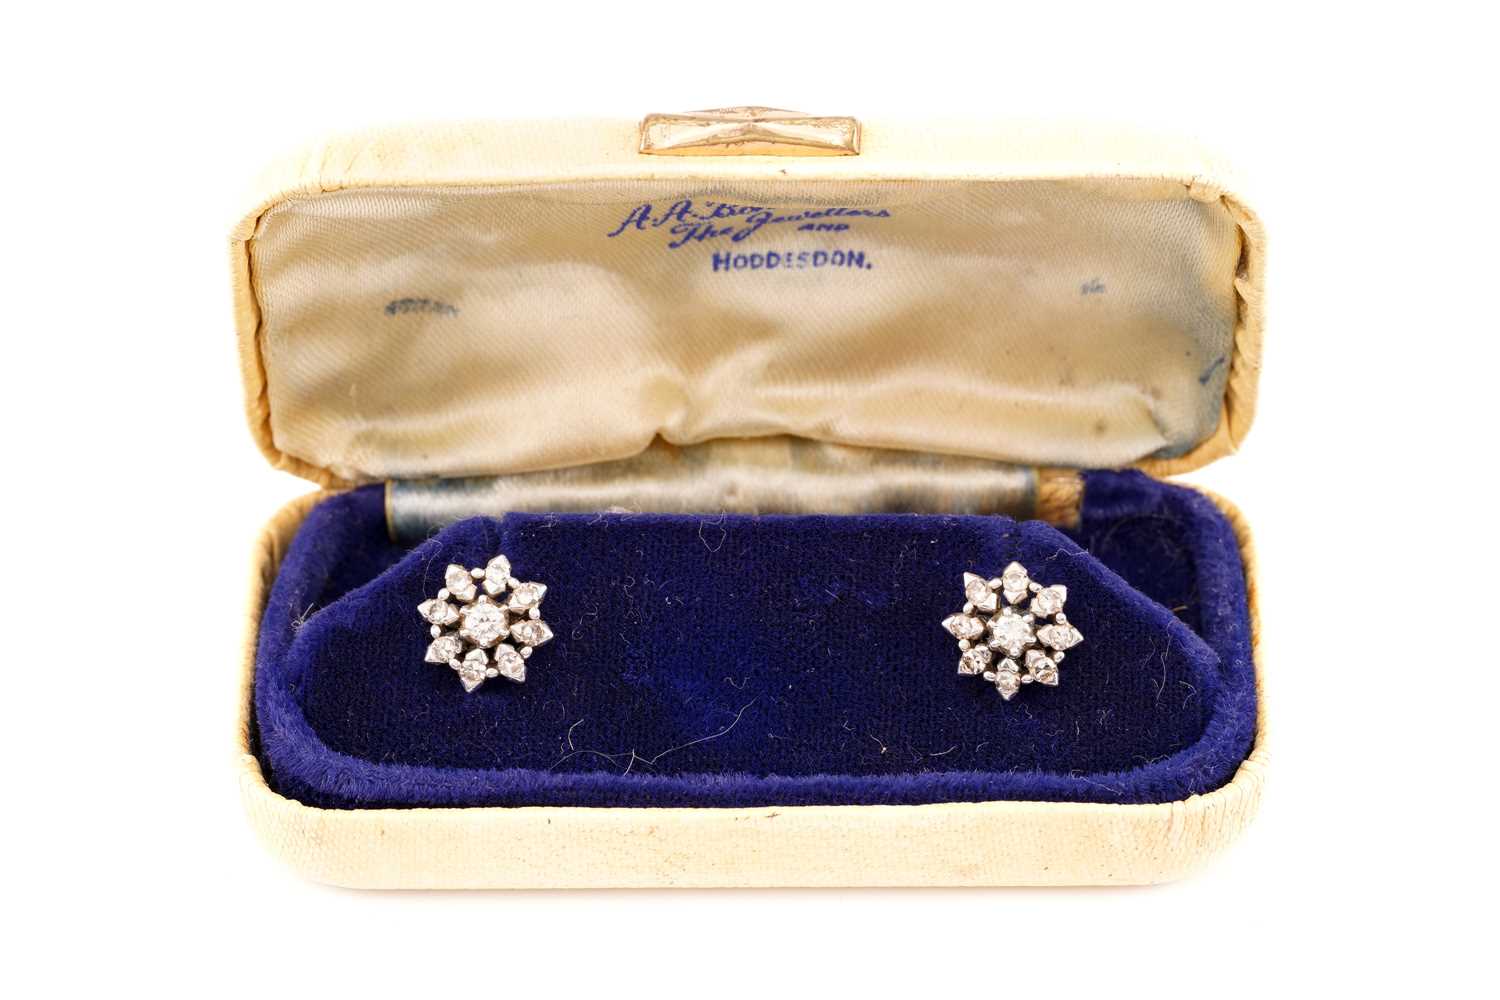 Lot 70 - A pair of diamond cluster earrings, each...